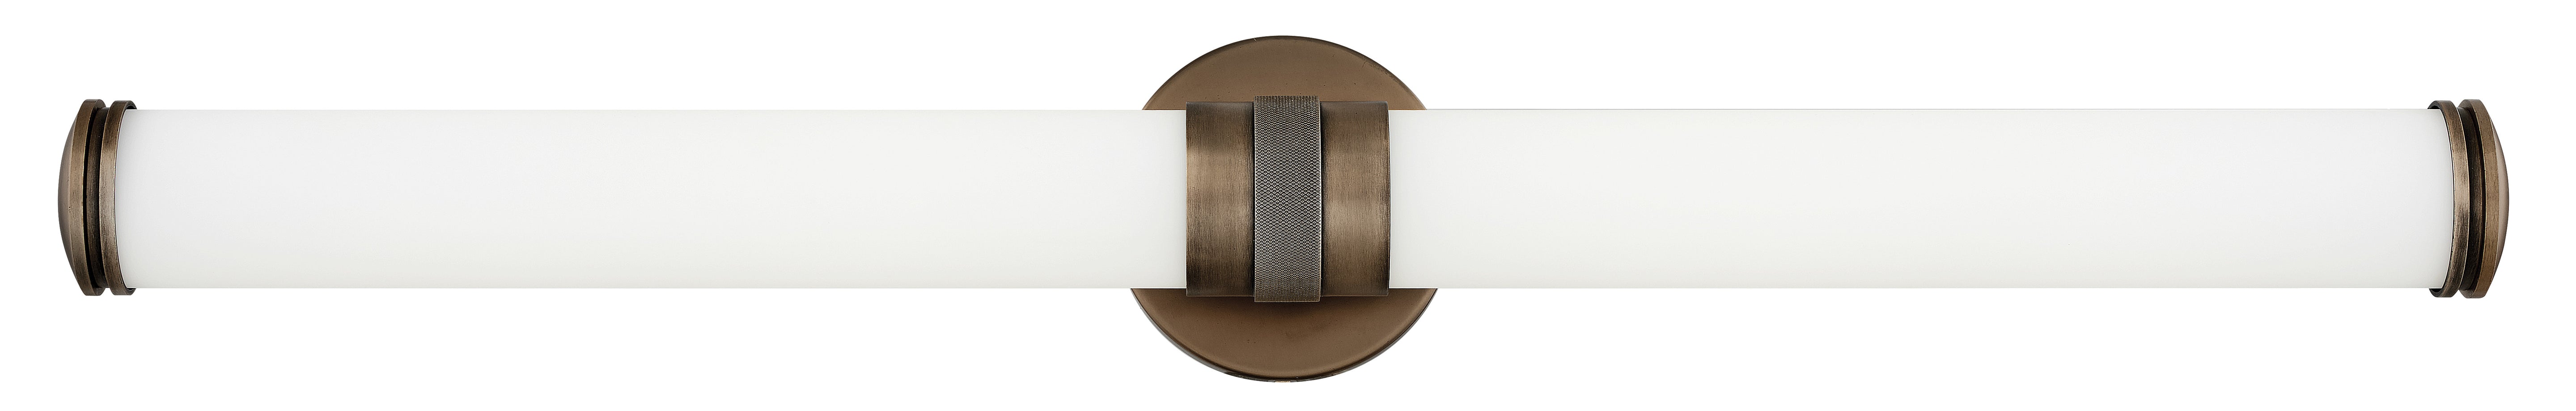 REMI Bathroom sconce Bronze INTEGRATED LED - 5074CR | HINKLEY